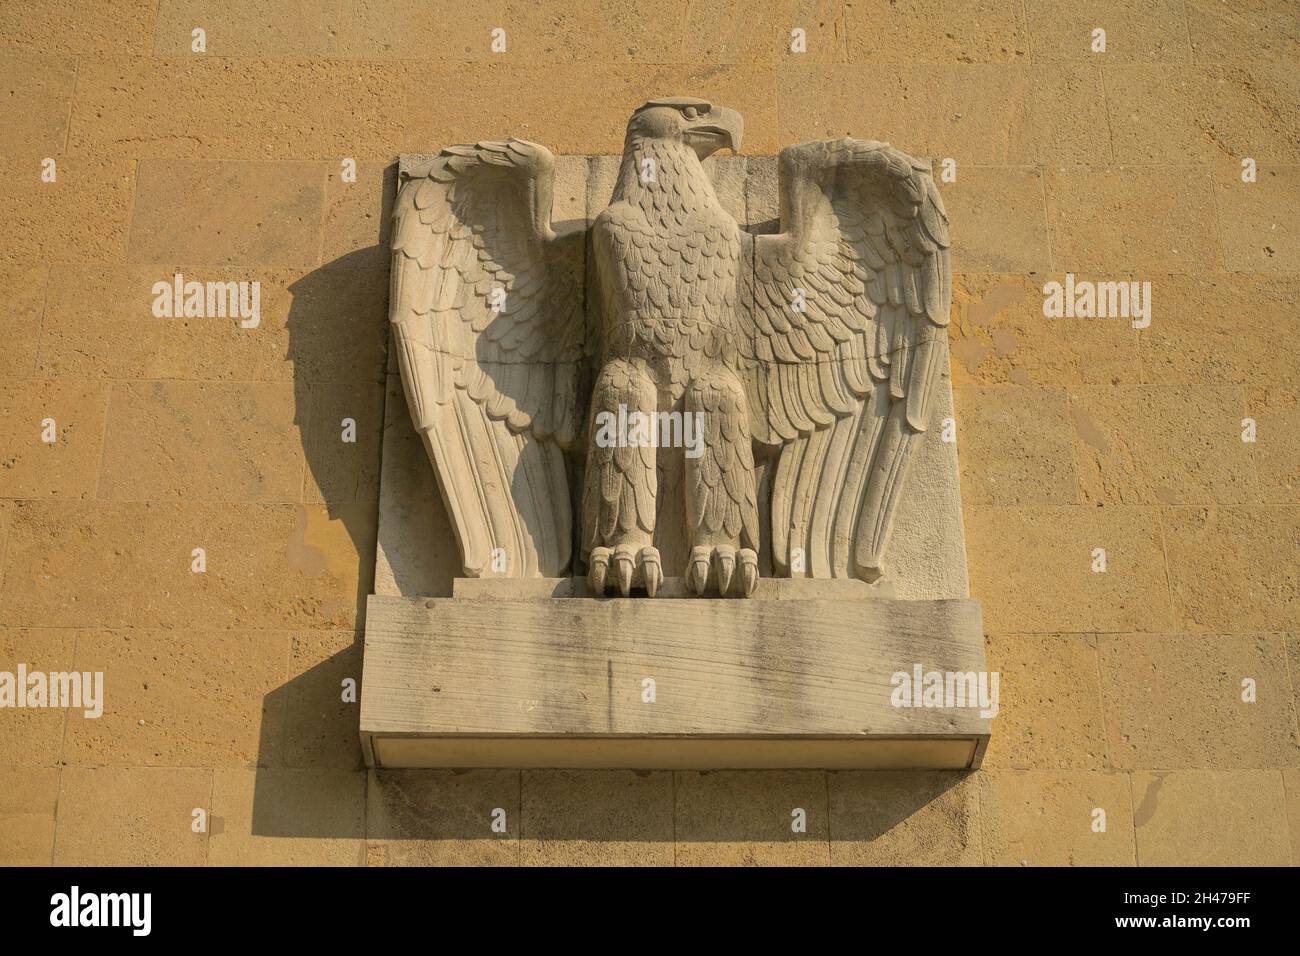 Adler, Platz der Luftbrücke, Tempelhof, Berlín, Alemania Foto de stock